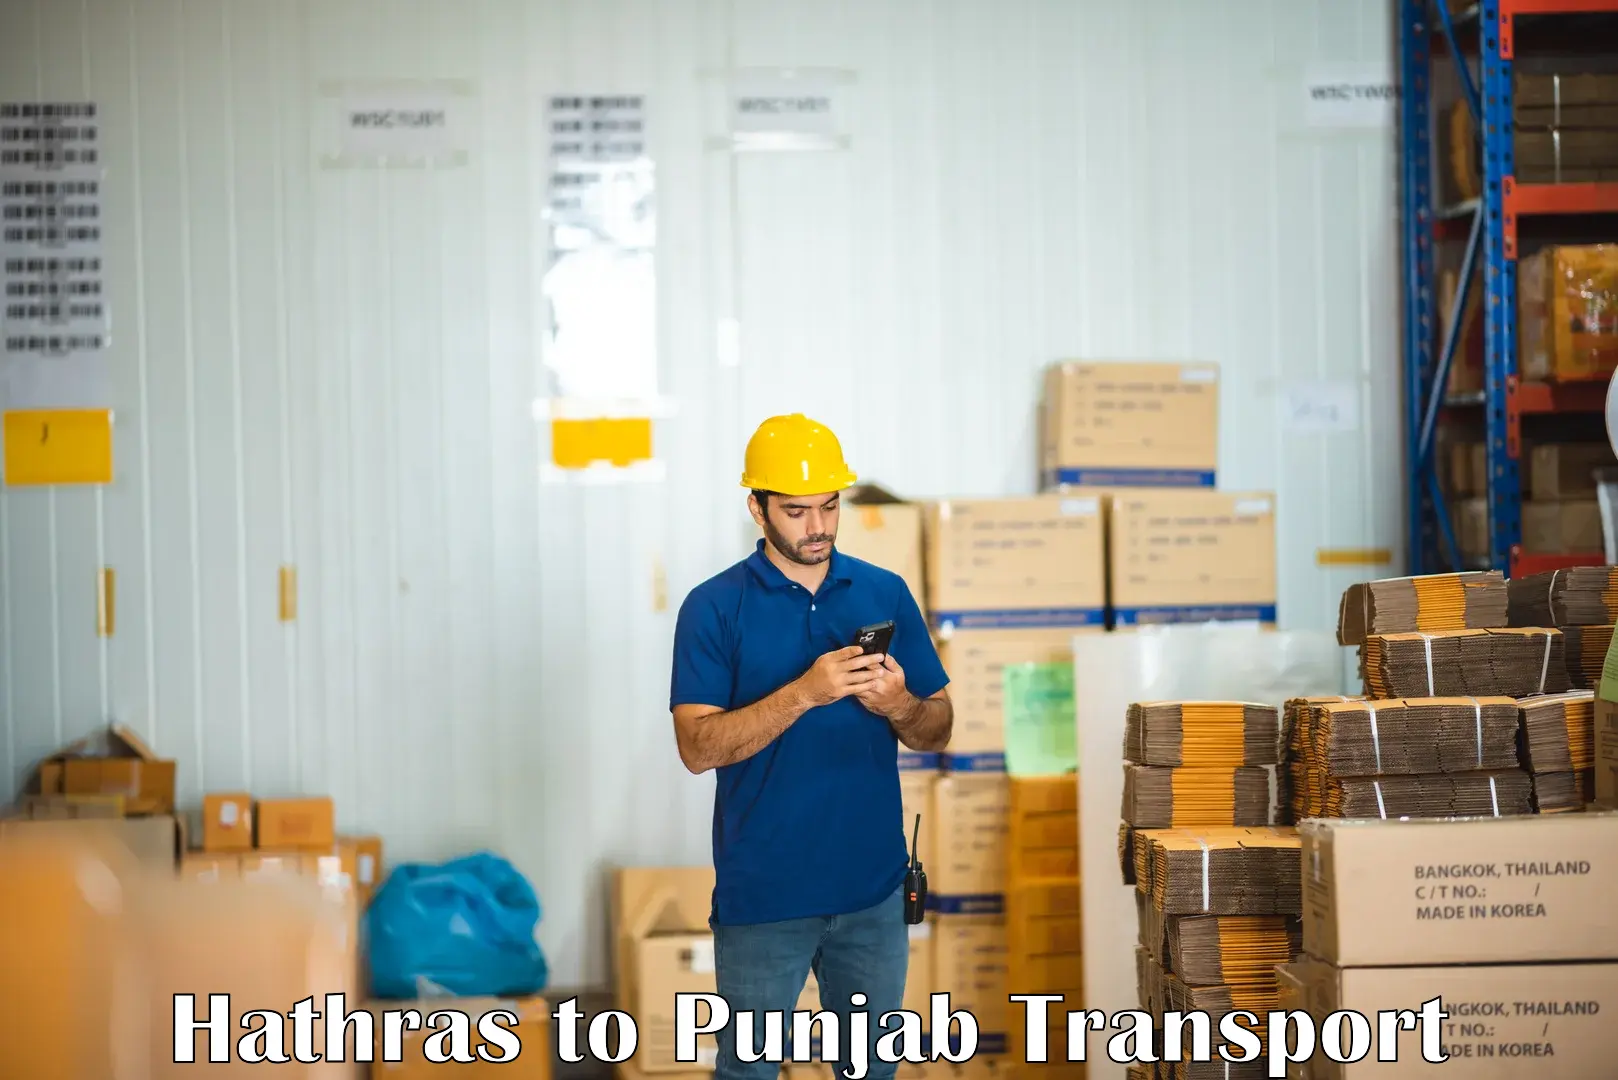 Delivery service Hathras to Zirakpur